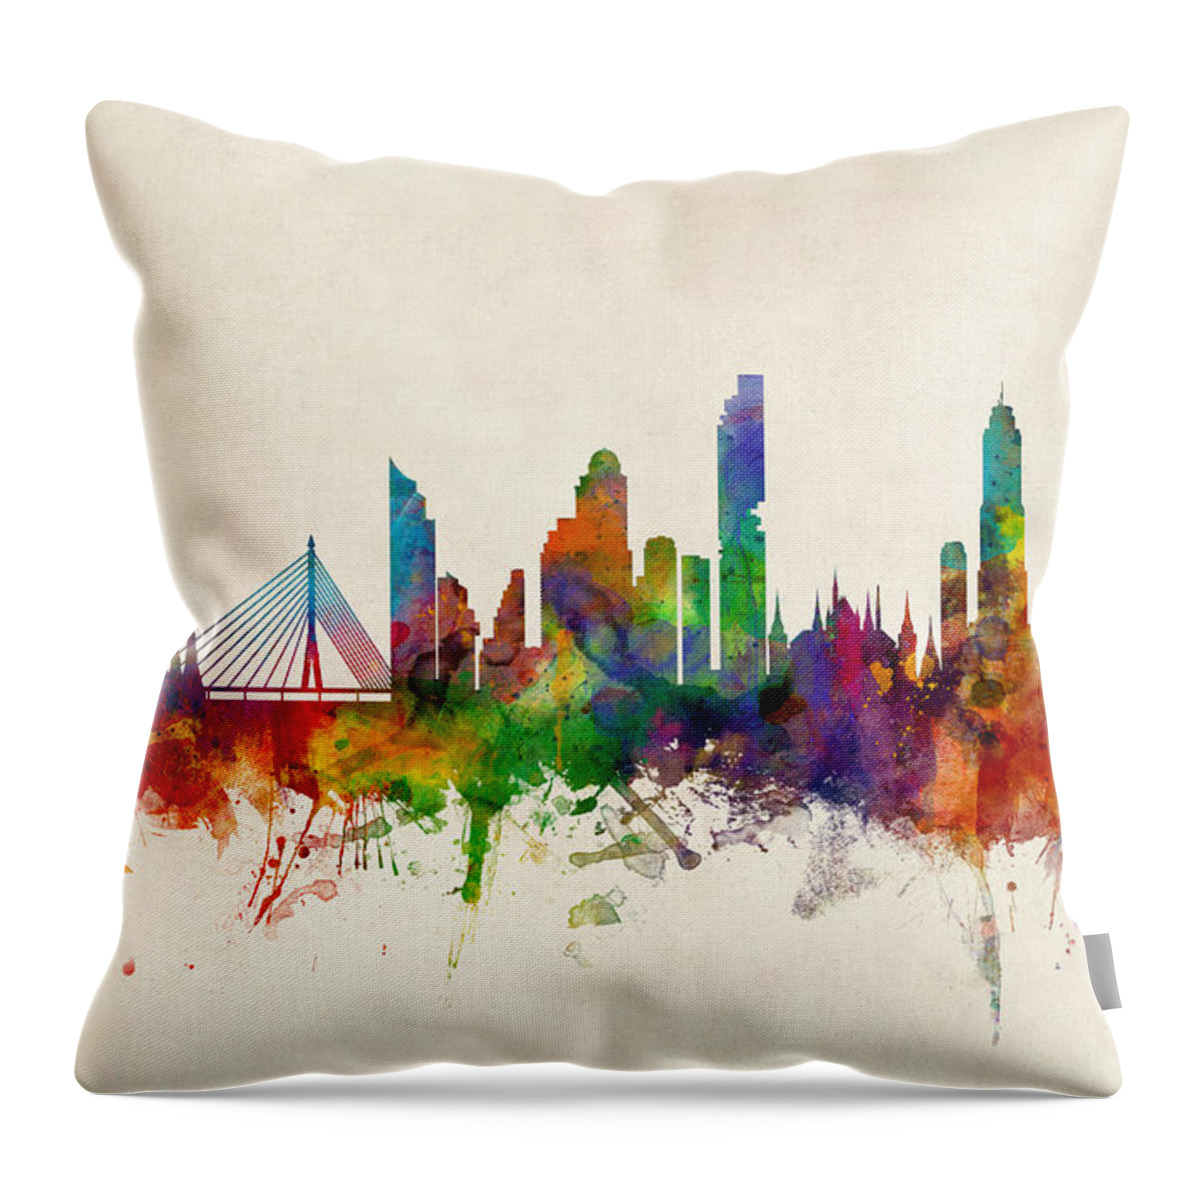 Watercolor Art Print Of The Skyline Of Bangkok Throw Pillow featuring the digital art Bangkok Thailand Skyline by Michael Tompsett